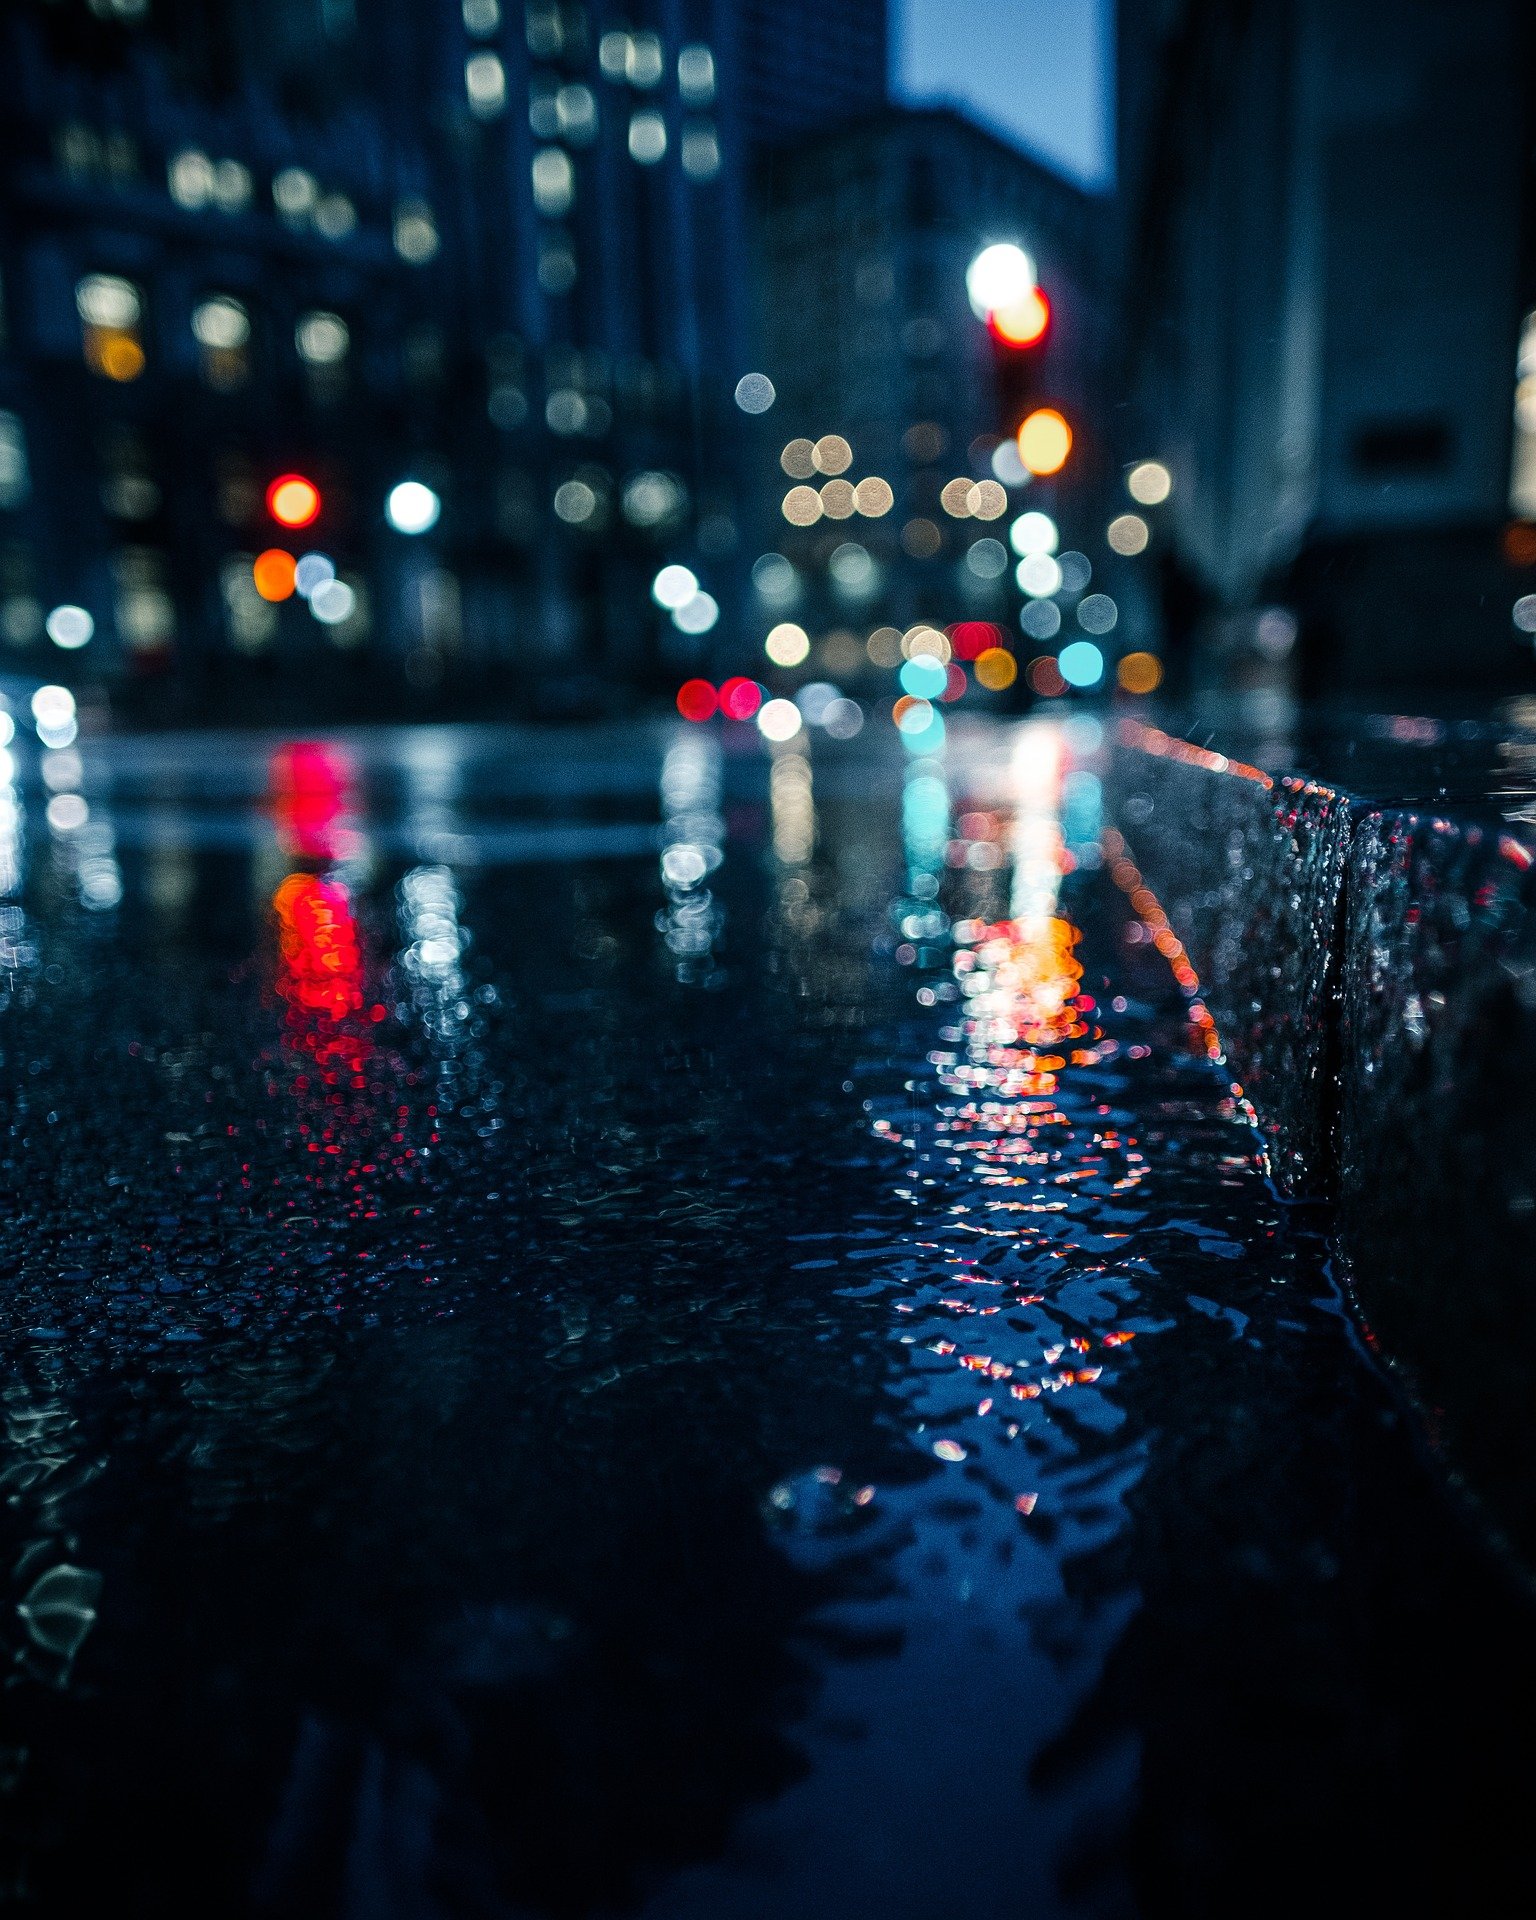 rain on road at night